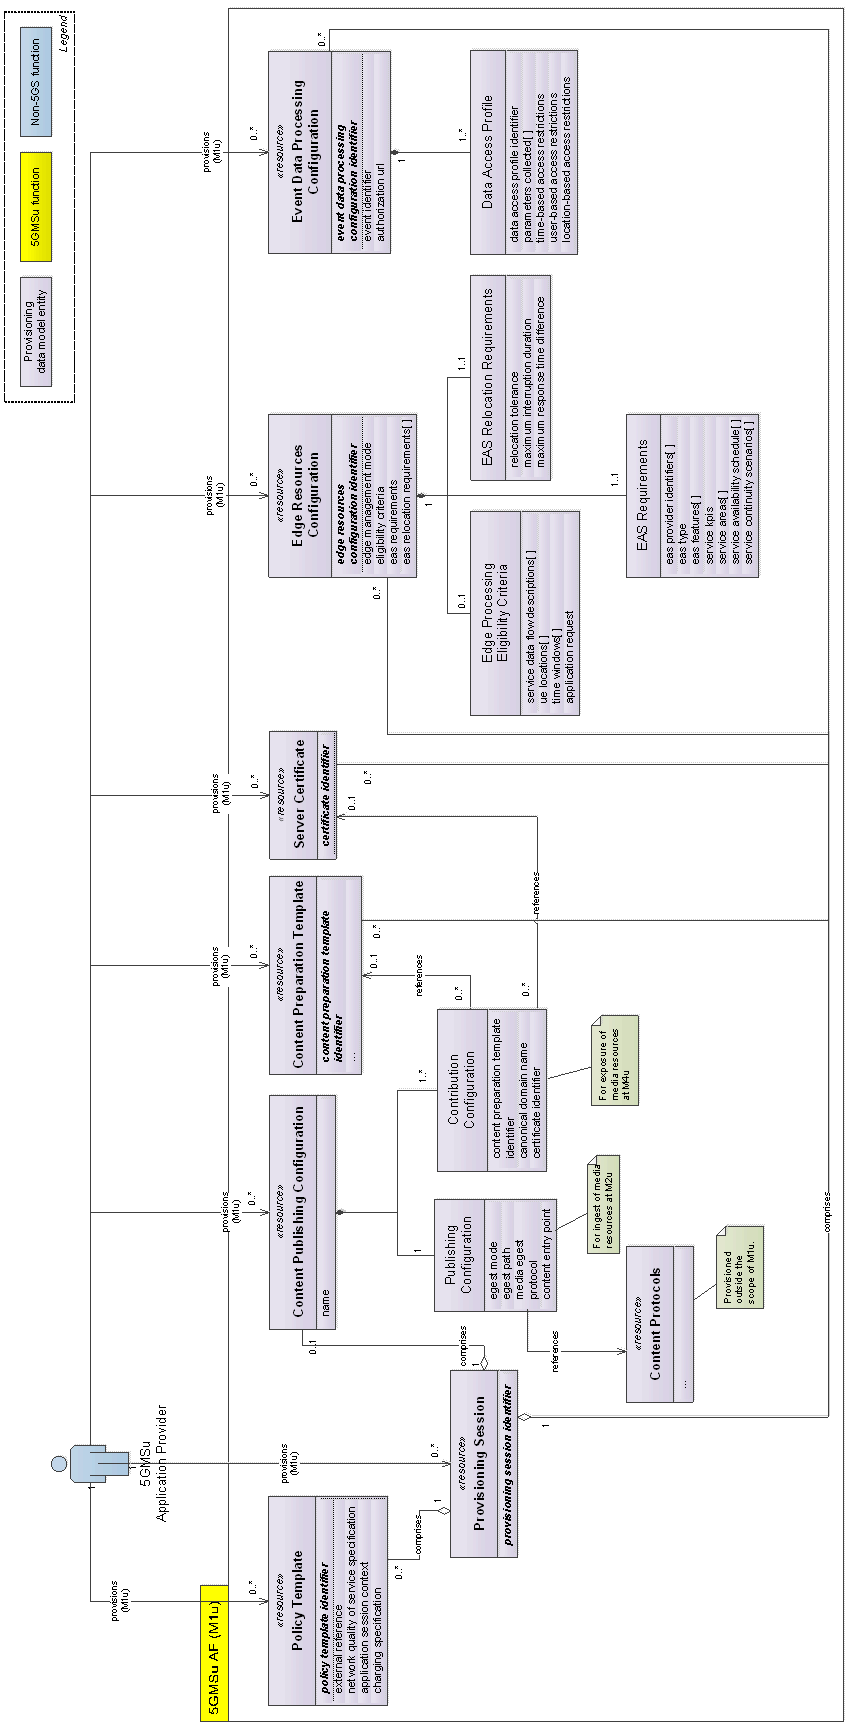 Copy of original 3GPP image for 3GPP TS 26.501, Fig. 6.2.2.1-1: M1u provisioning domain model 